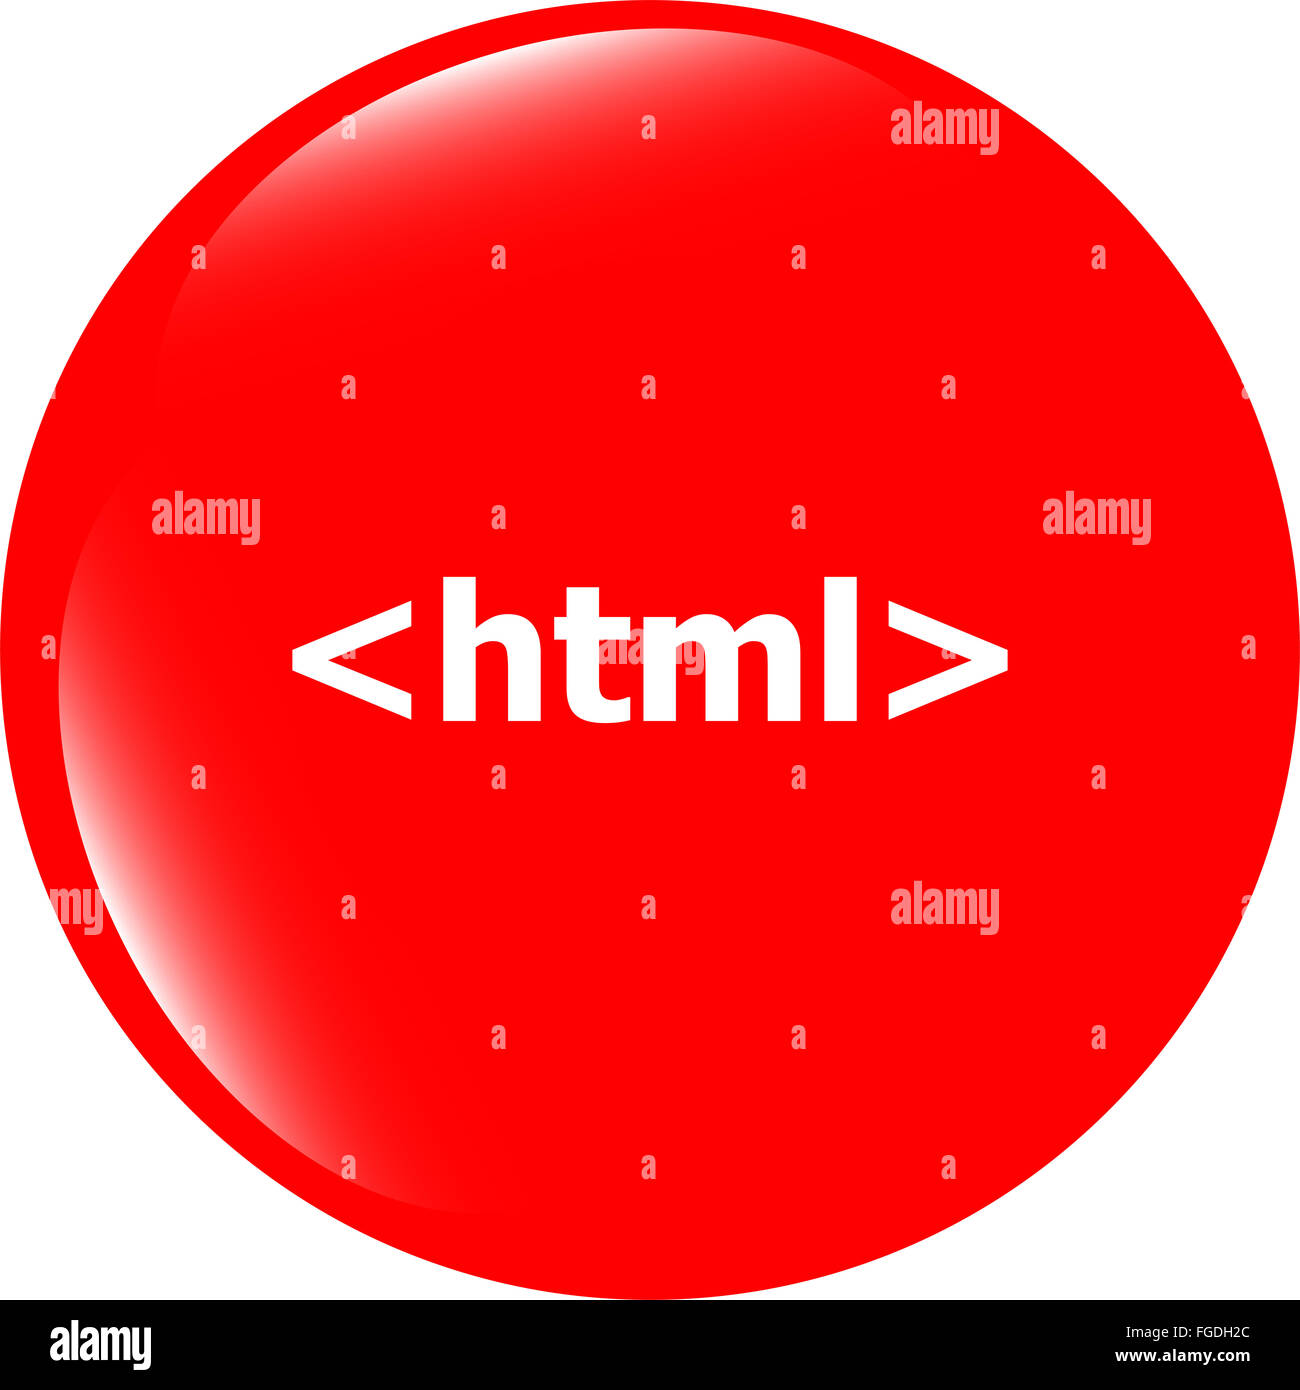 html 5 sign icon. Programming language symbol. Circles buttons Stock Photo